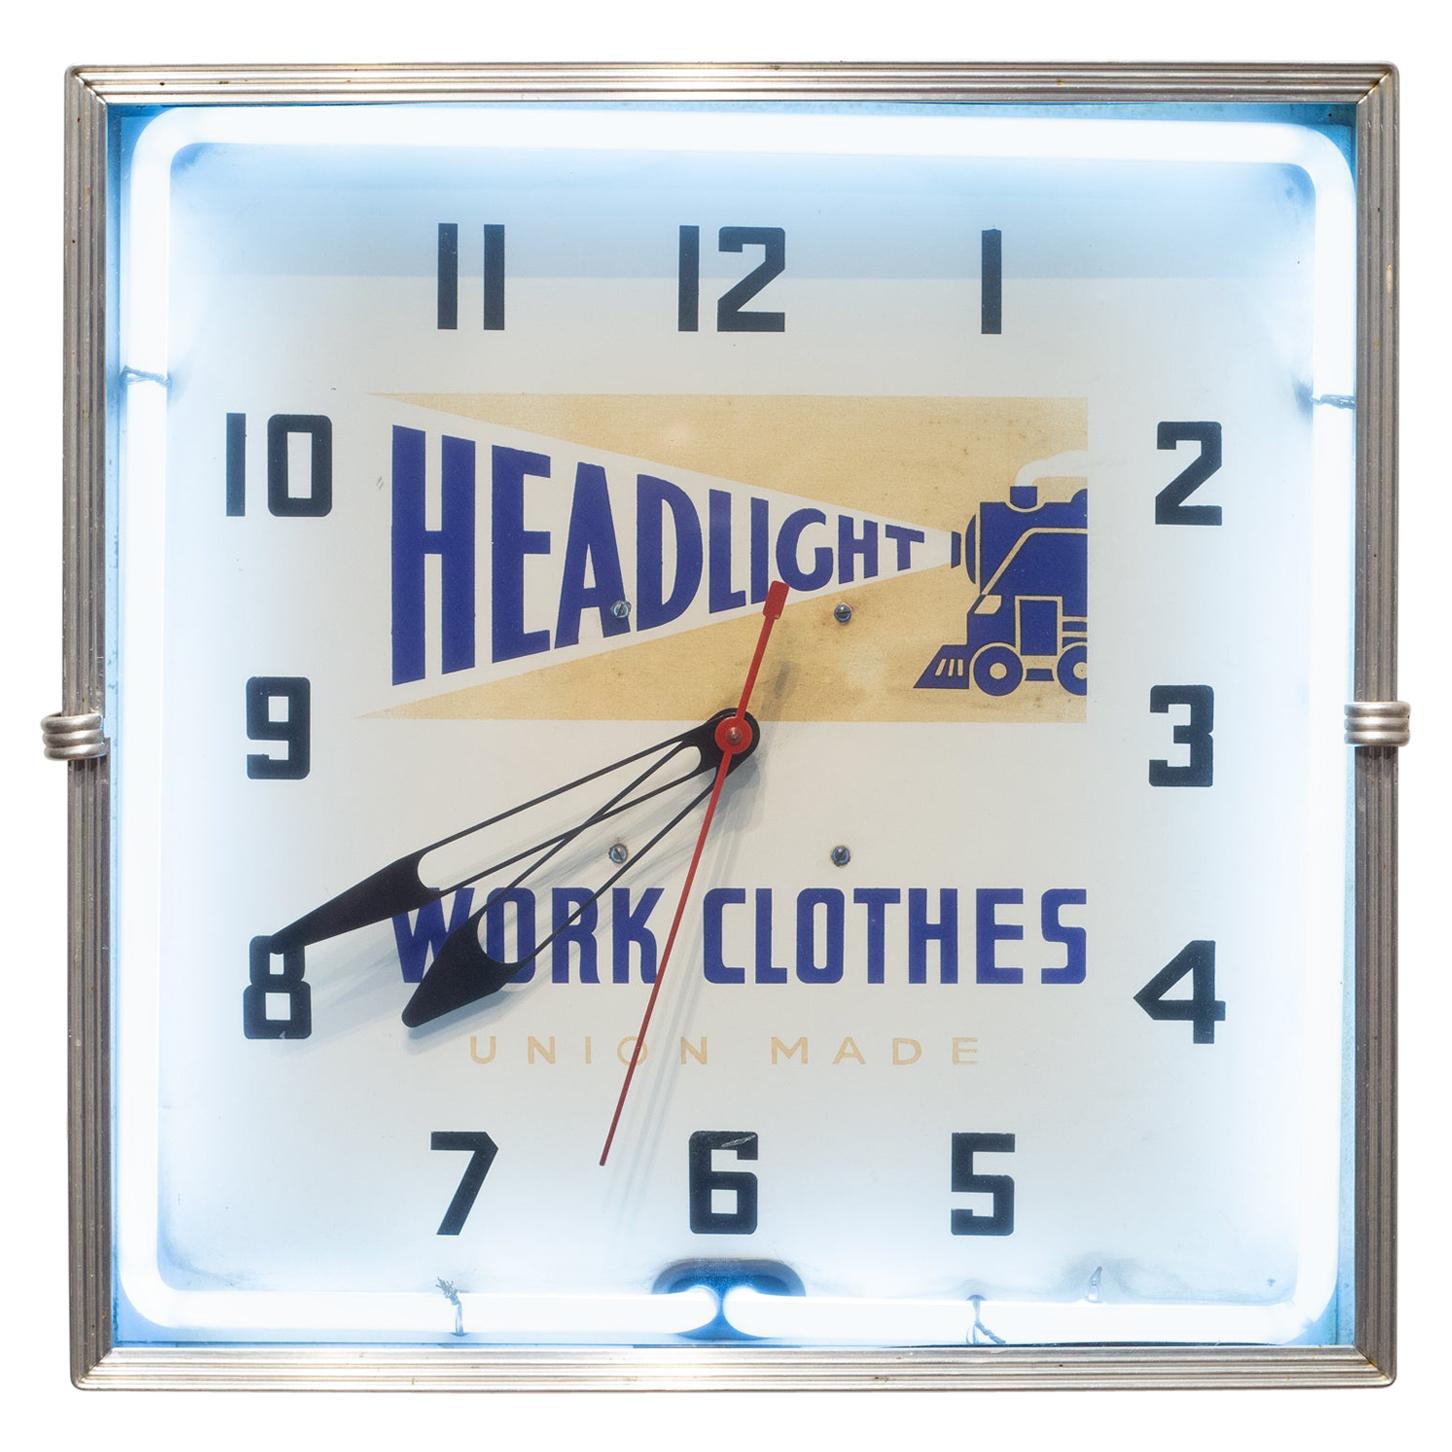 Headlight Work Clothes Union Made Neon Wall Clock, circa 1949